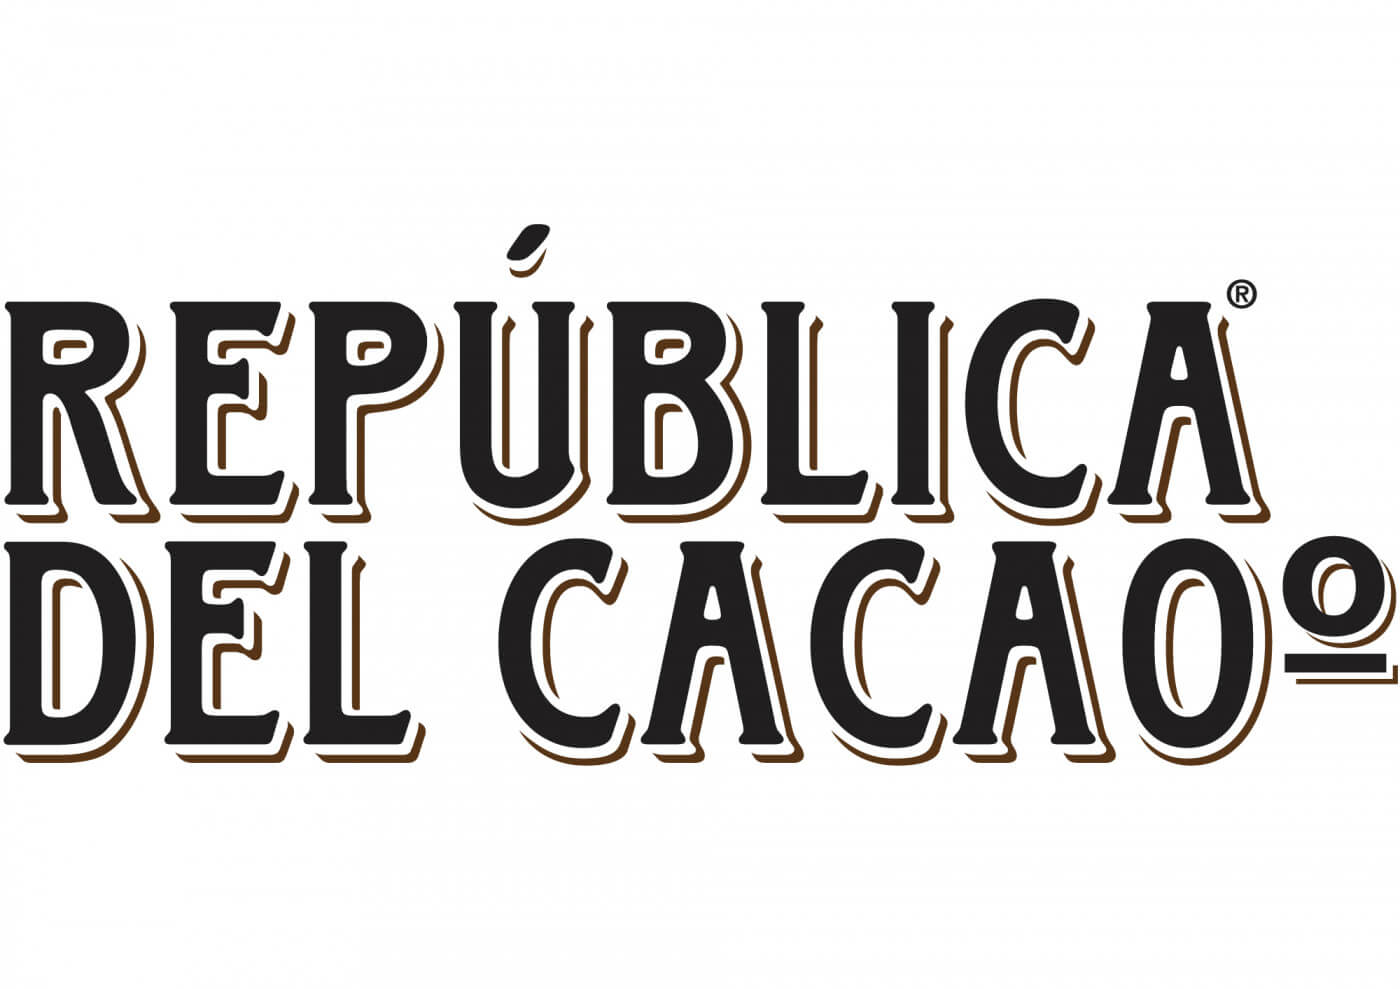 Republica del Cacao